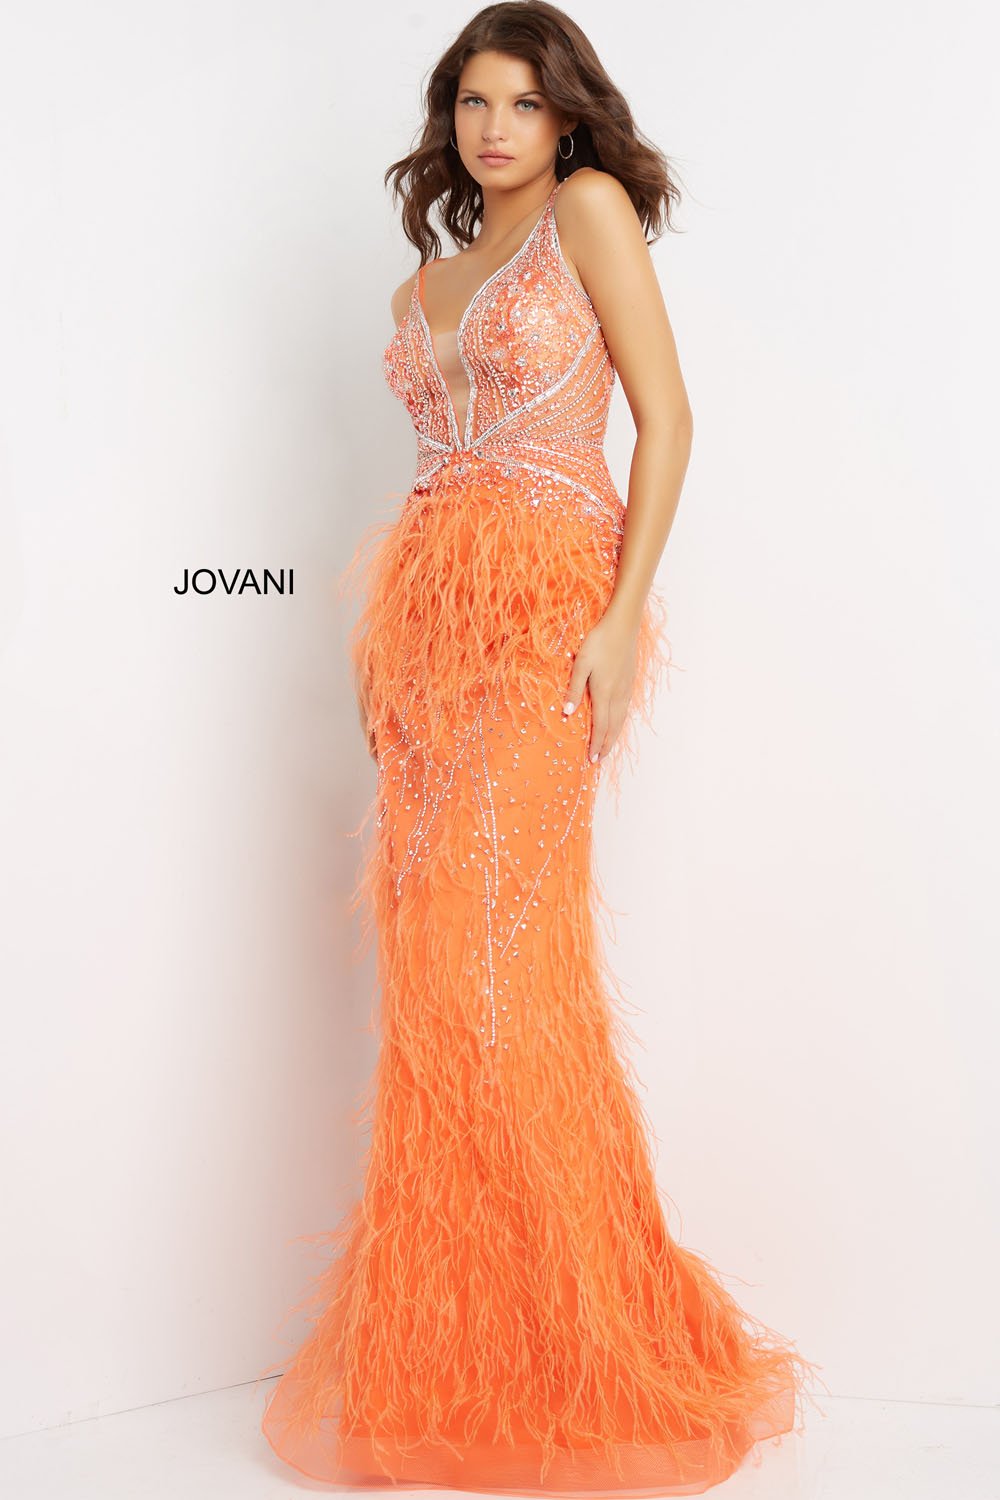 Jovani 03023 orange prom dresses images.